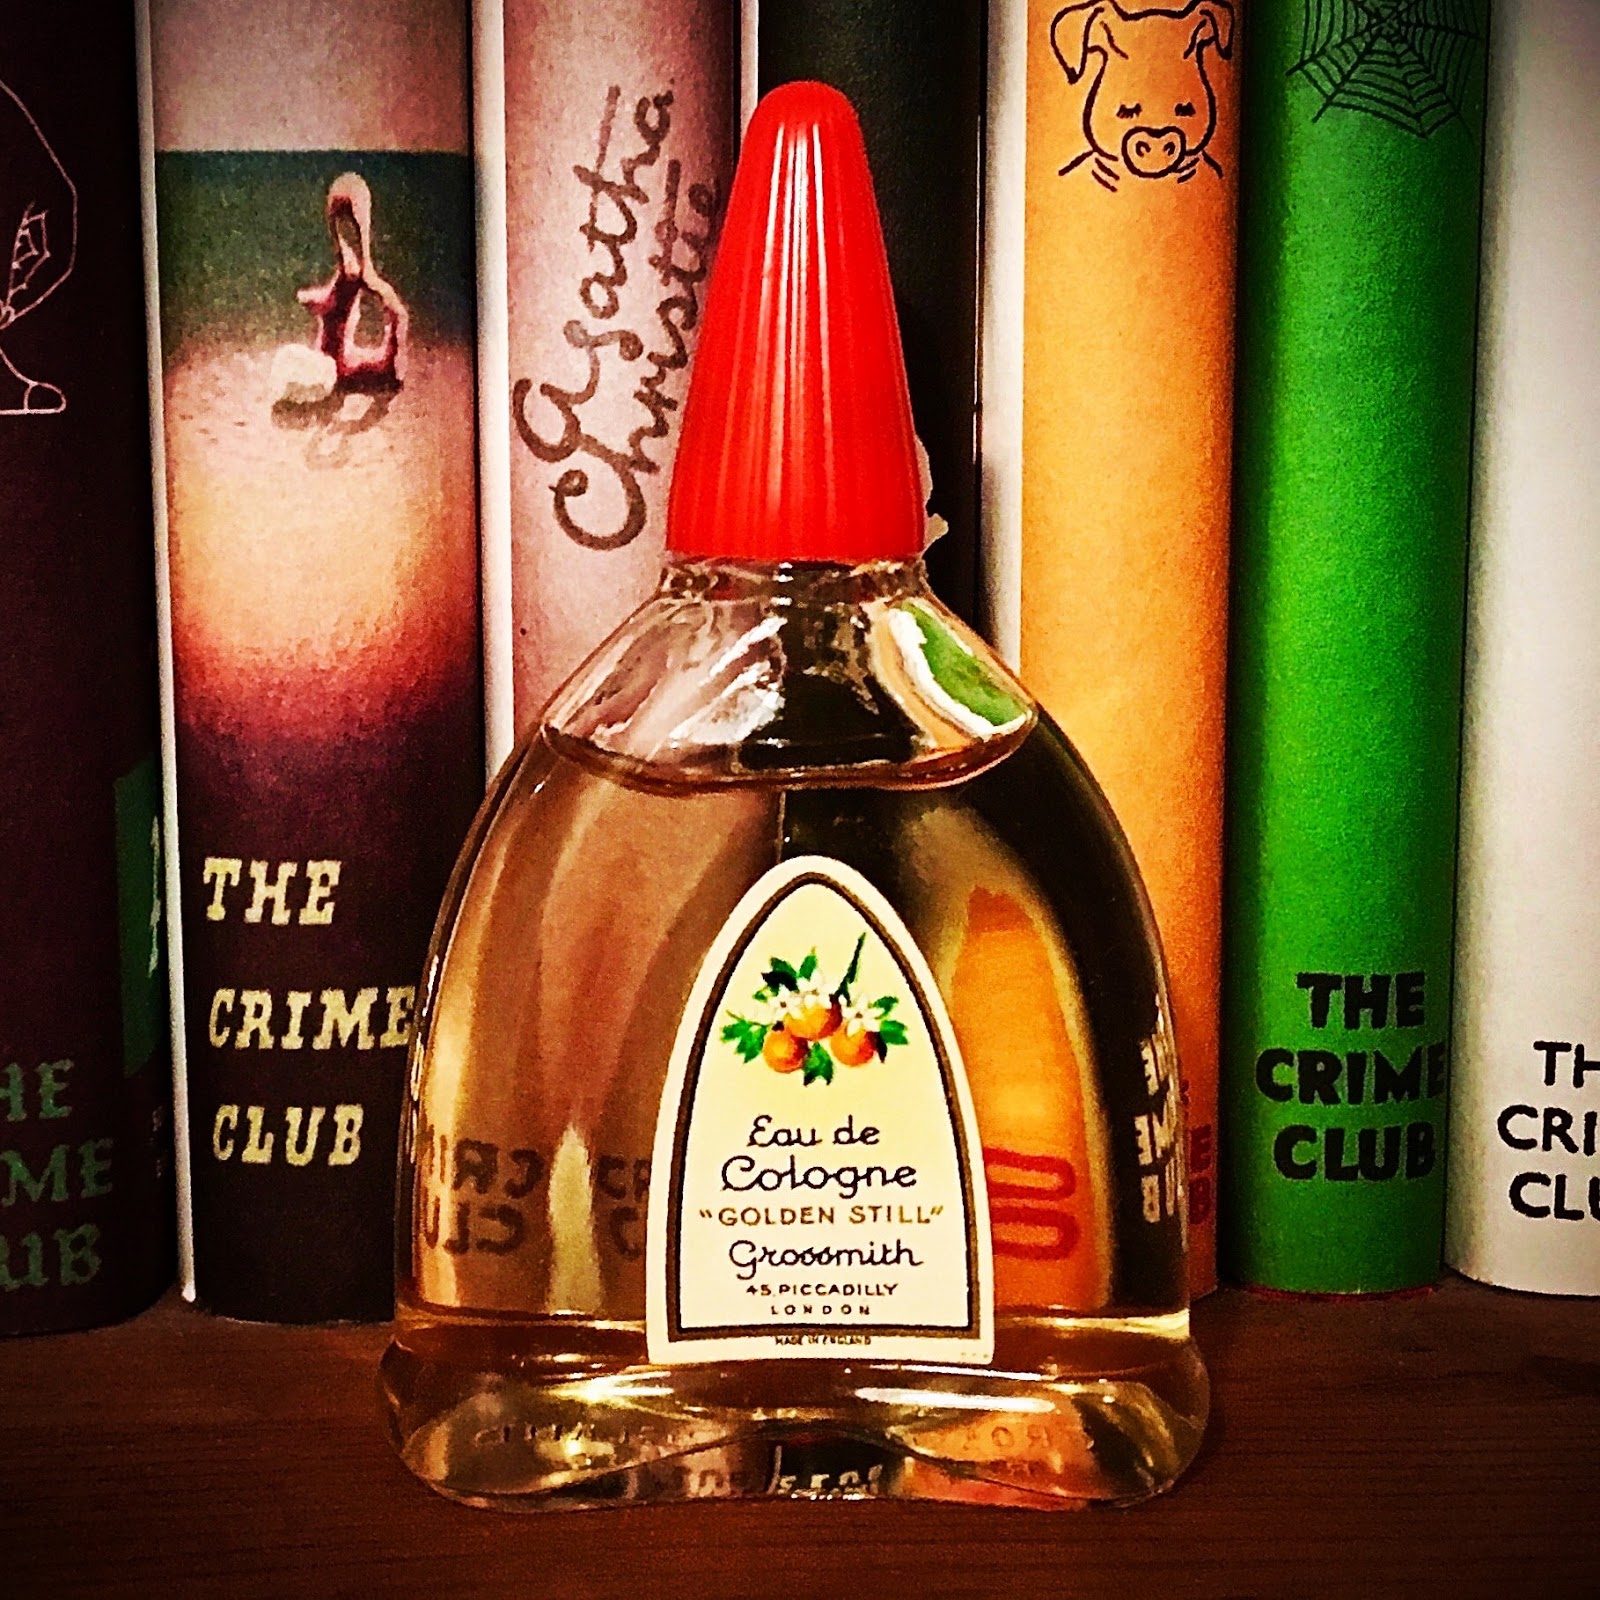 Shem - el- Nessim Grossmith perfume - a fragrance for women